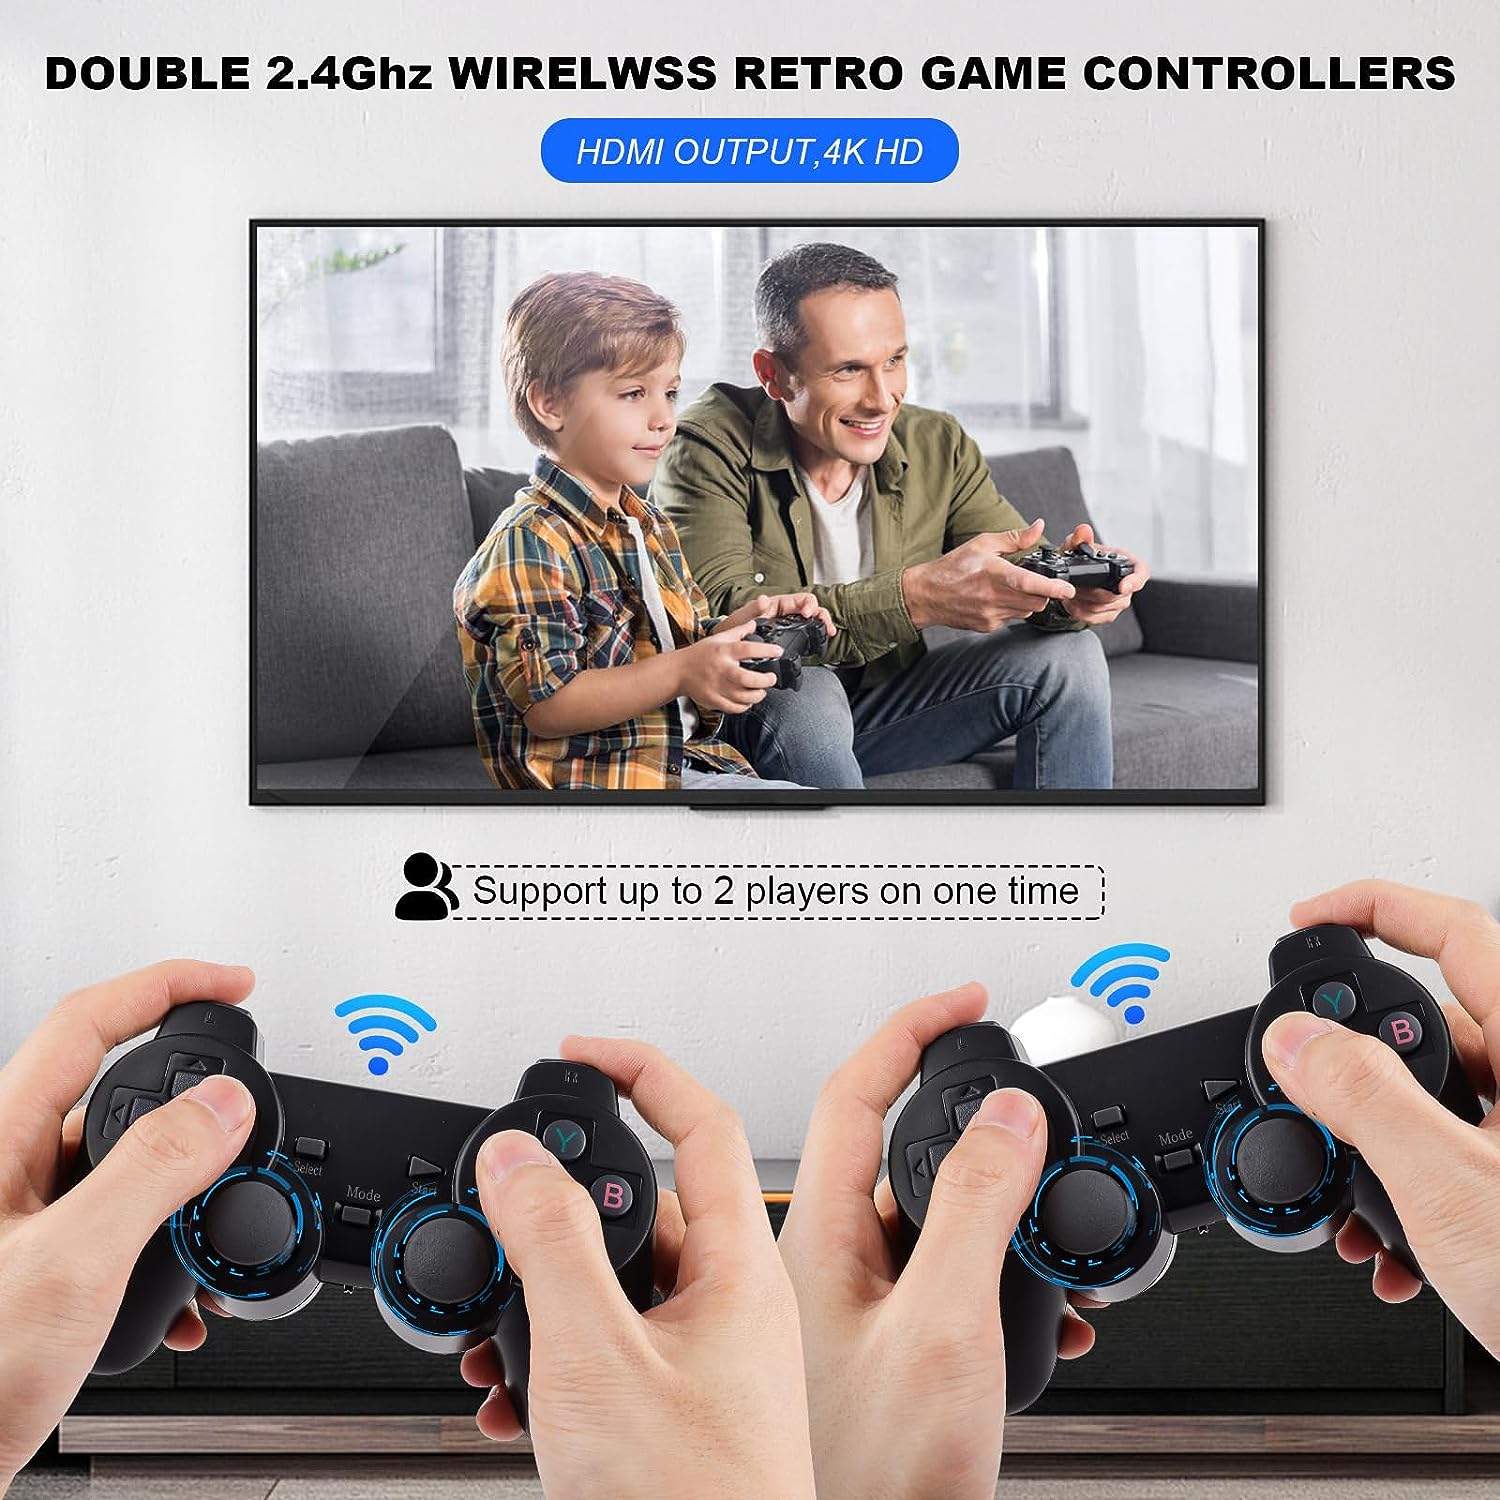 Wireless Retro Game Console Review